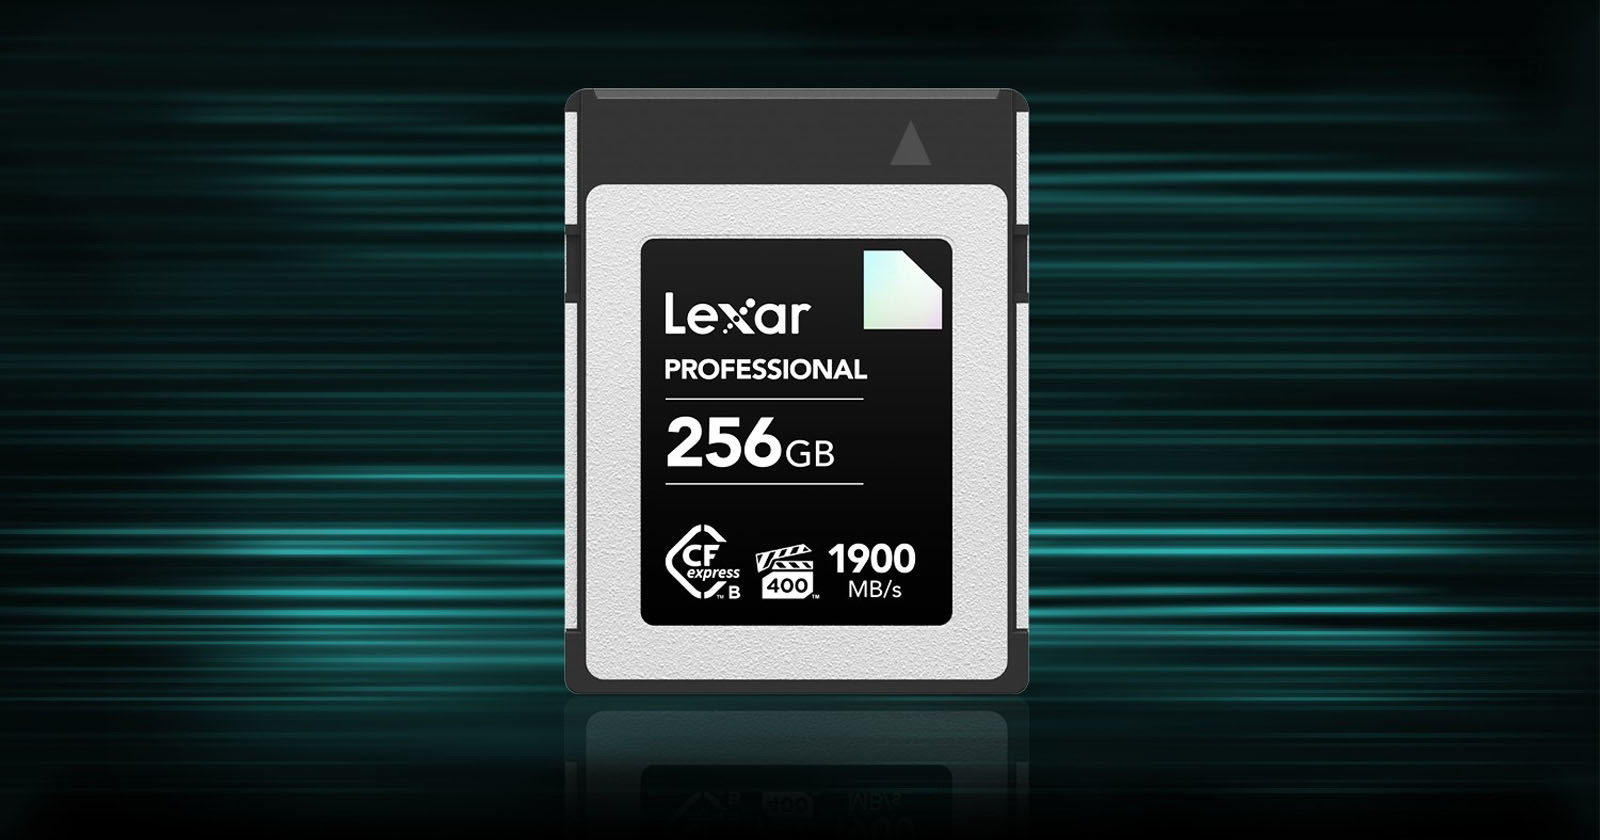  lexar cfexpress card has one huge benefit 